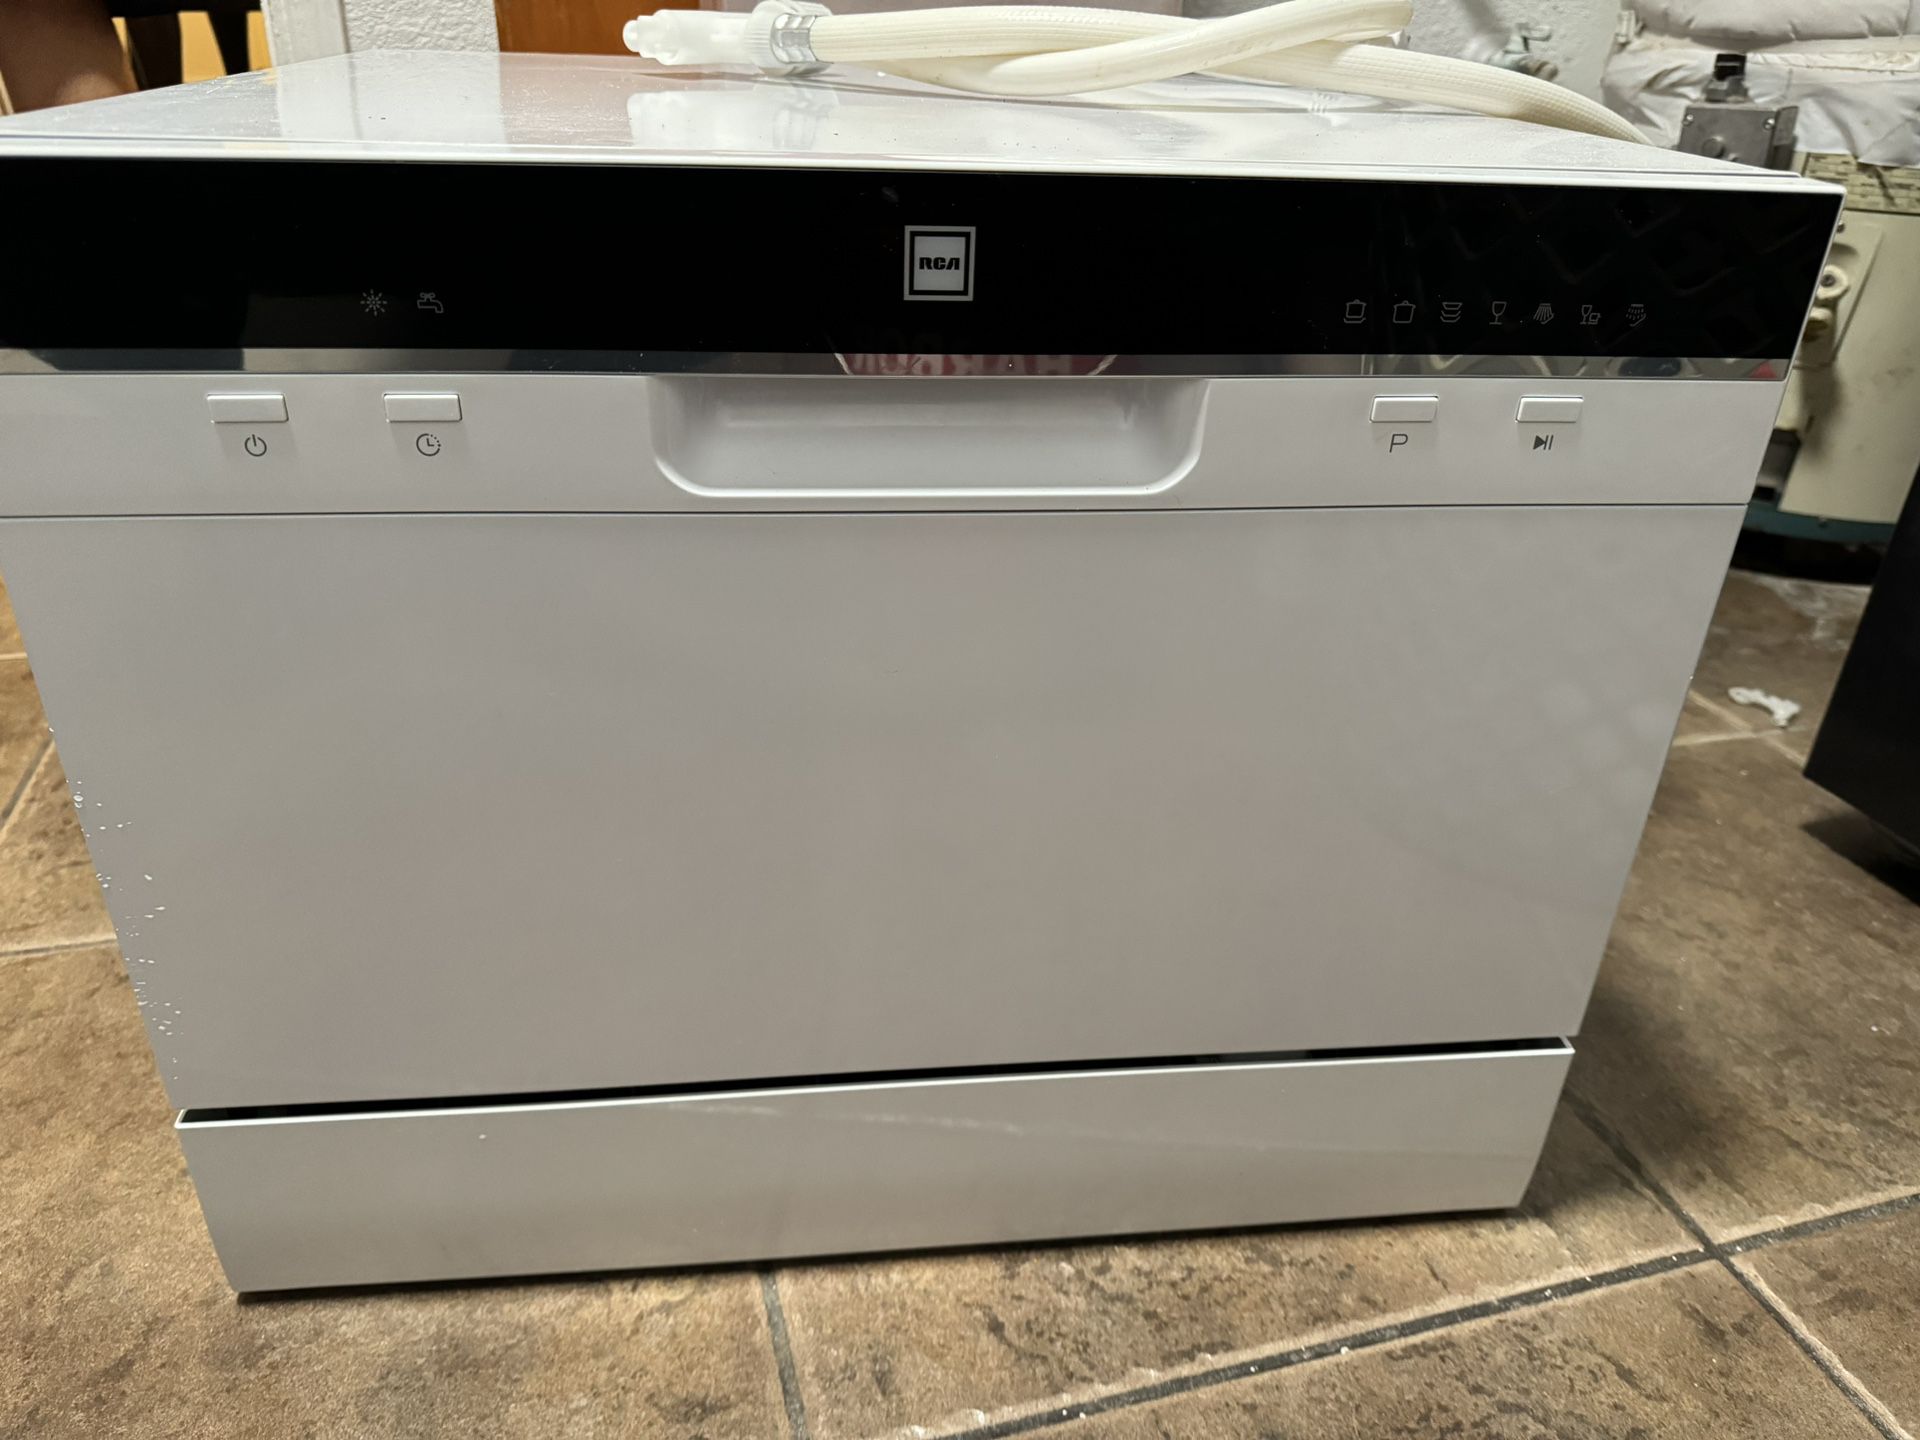 RCA Countertop Dishwasher 